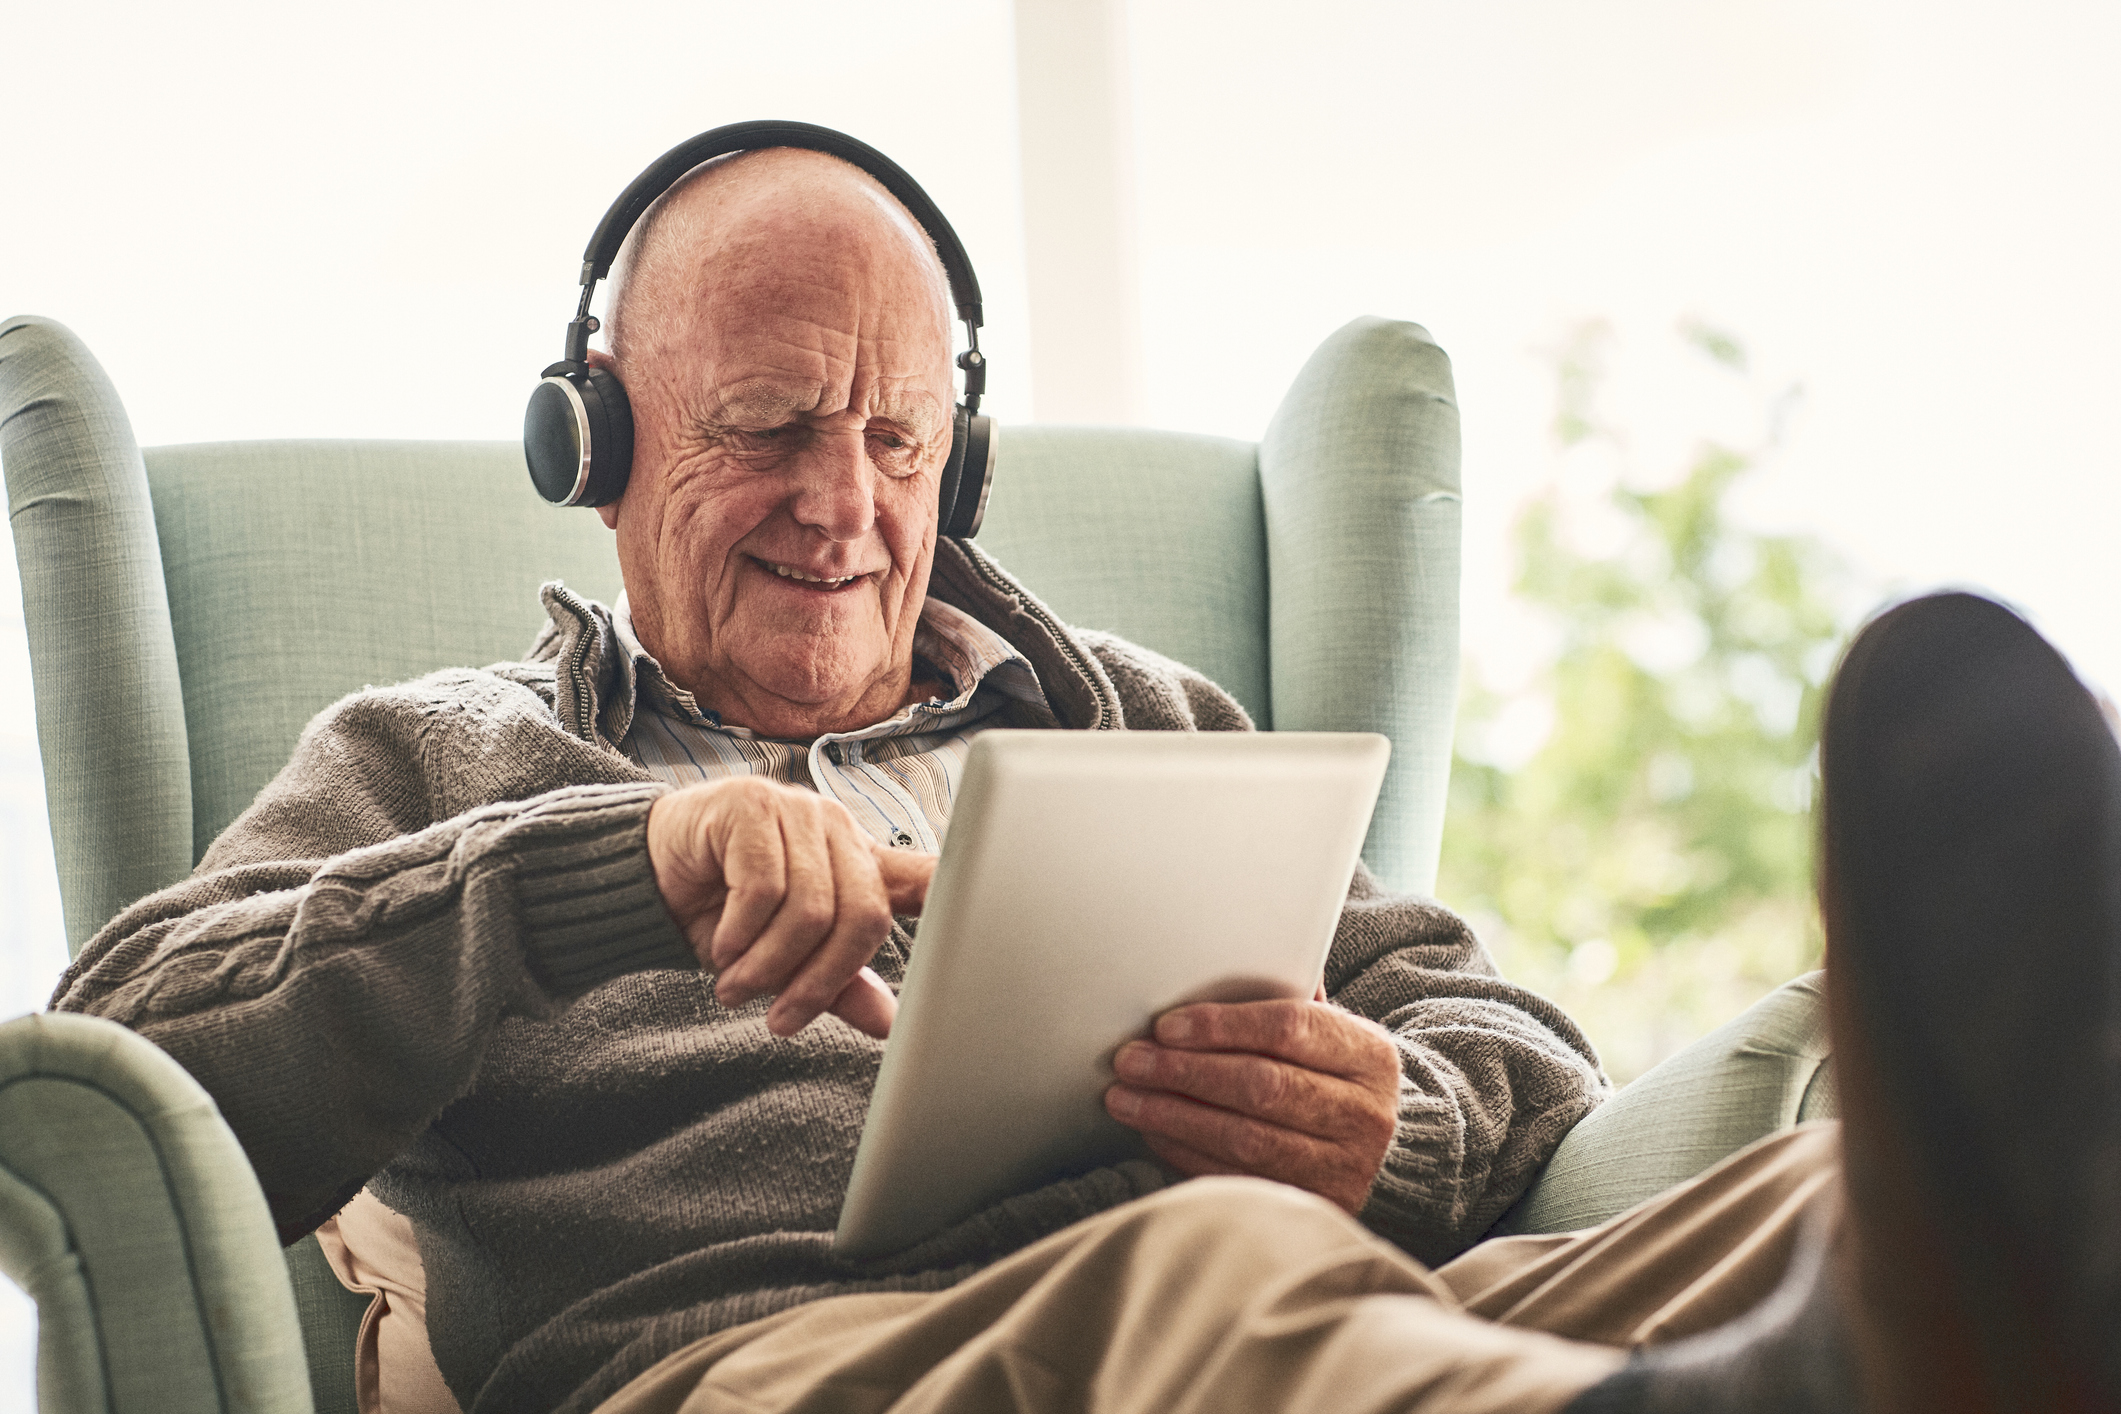 older adult sitting using iPad with headphones on